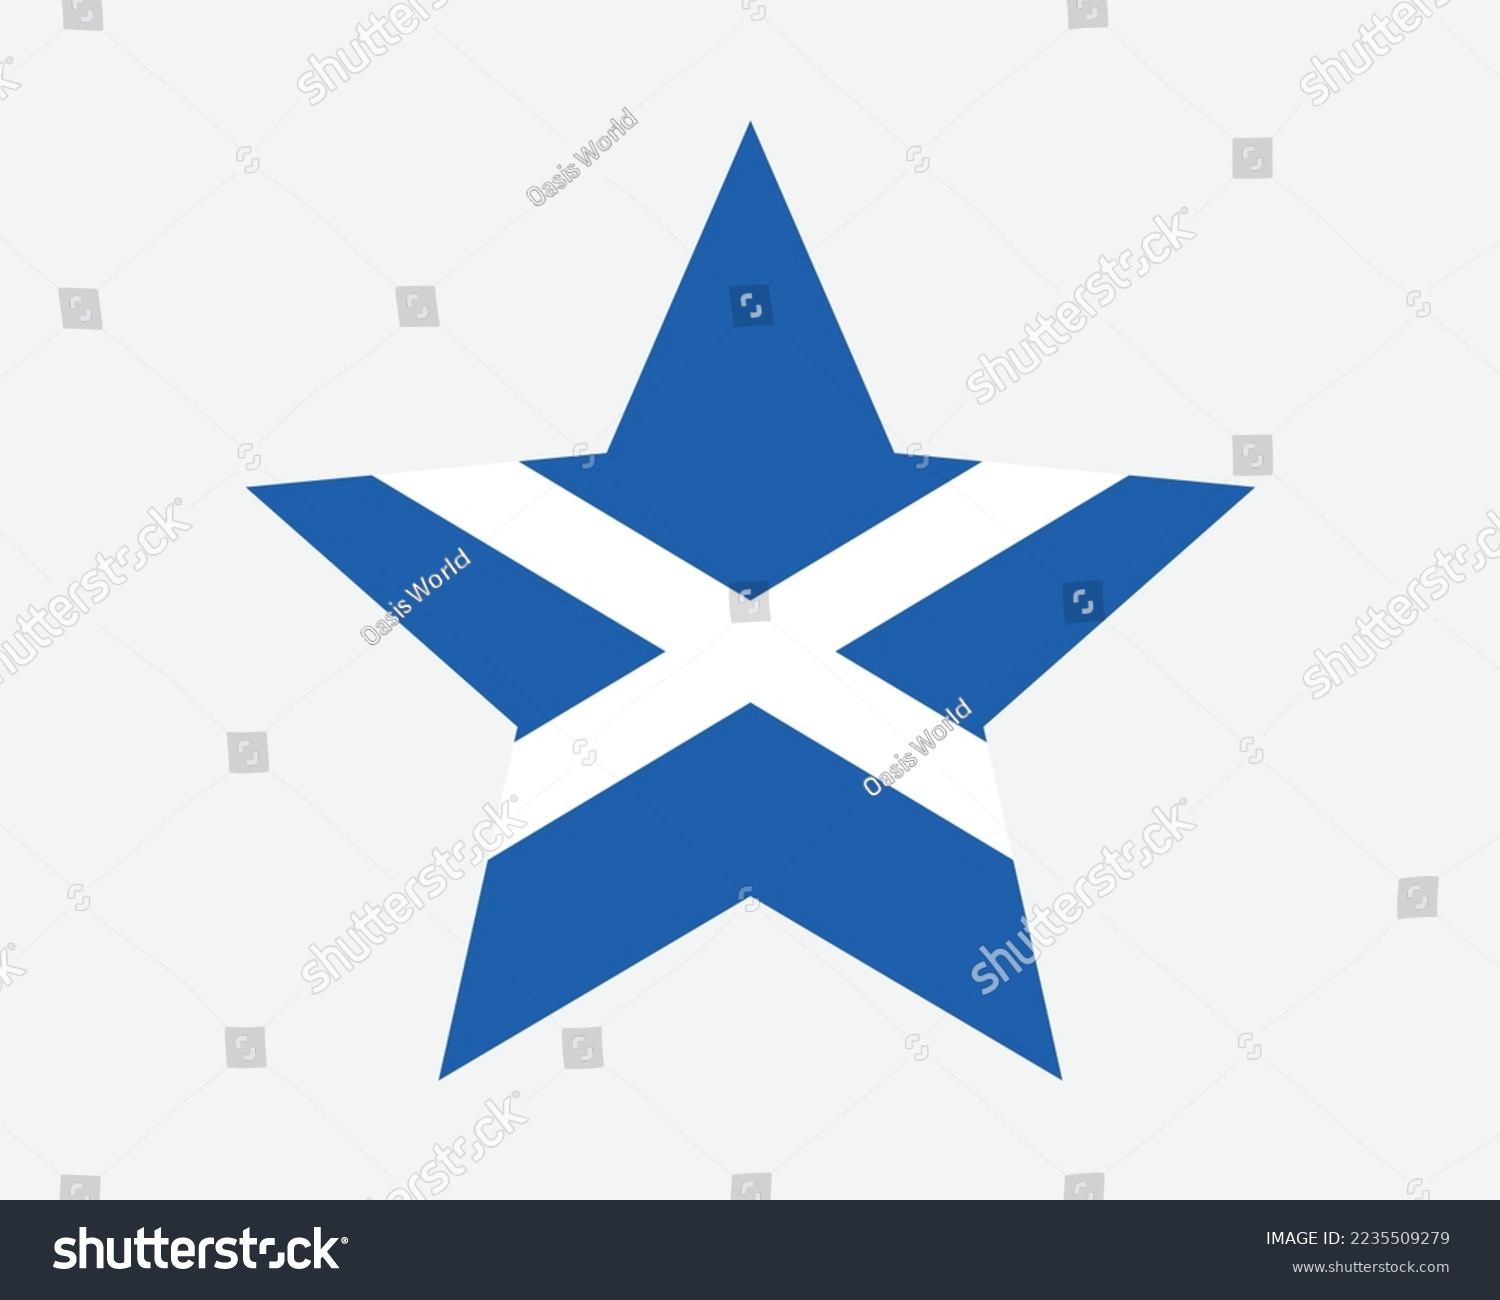 SVG of Scotland Star Flag. Scottish Star Shape Flag. Scots St. Andrew's Cross The Saltire UK United Kingdom Country National Banner Icon Symbol Vector Illustration svg